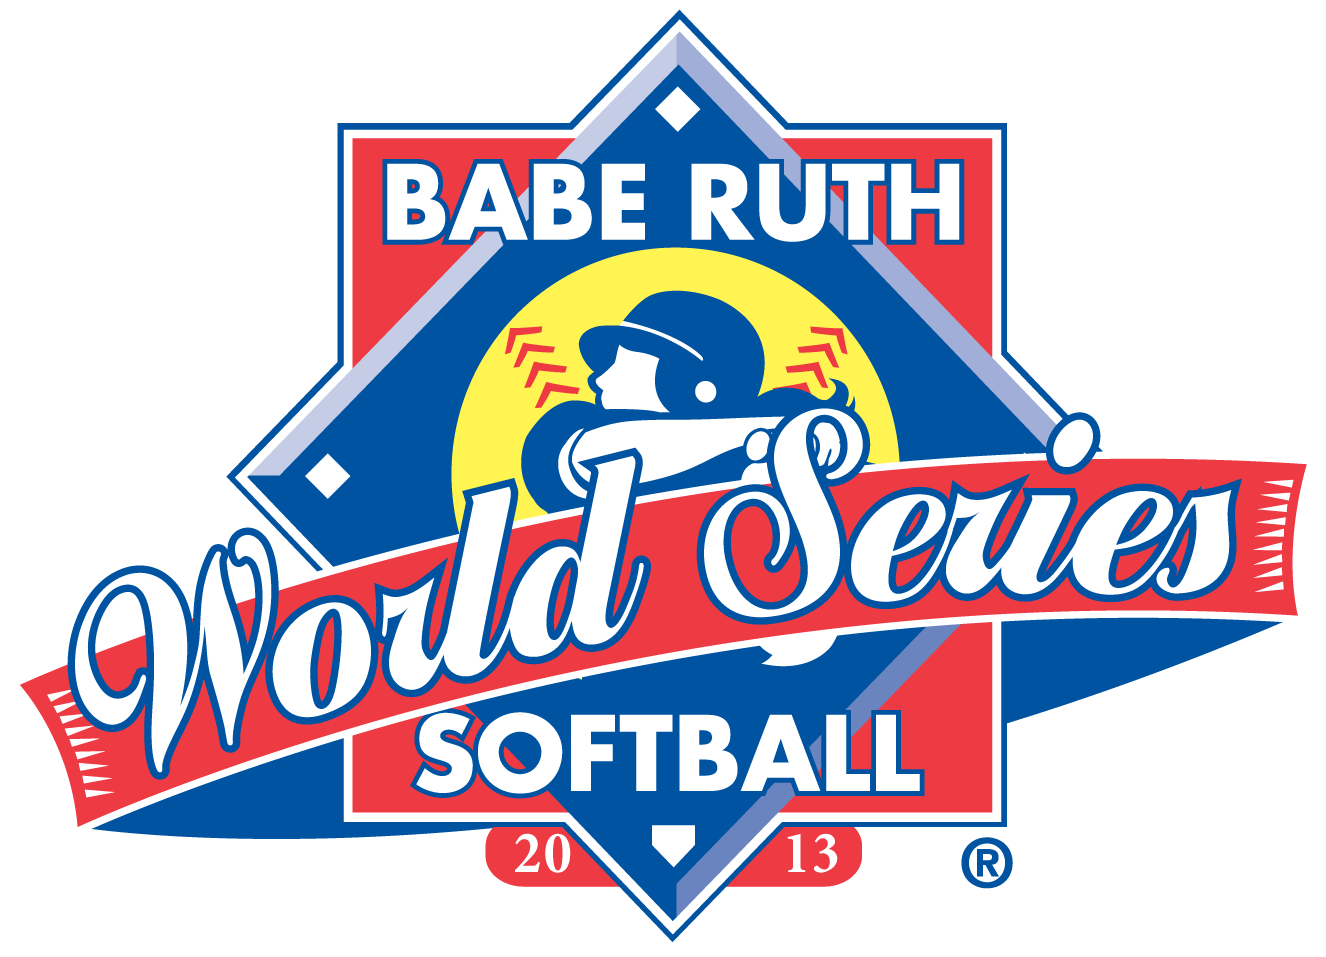 Ruth Softball Age Chart 2017